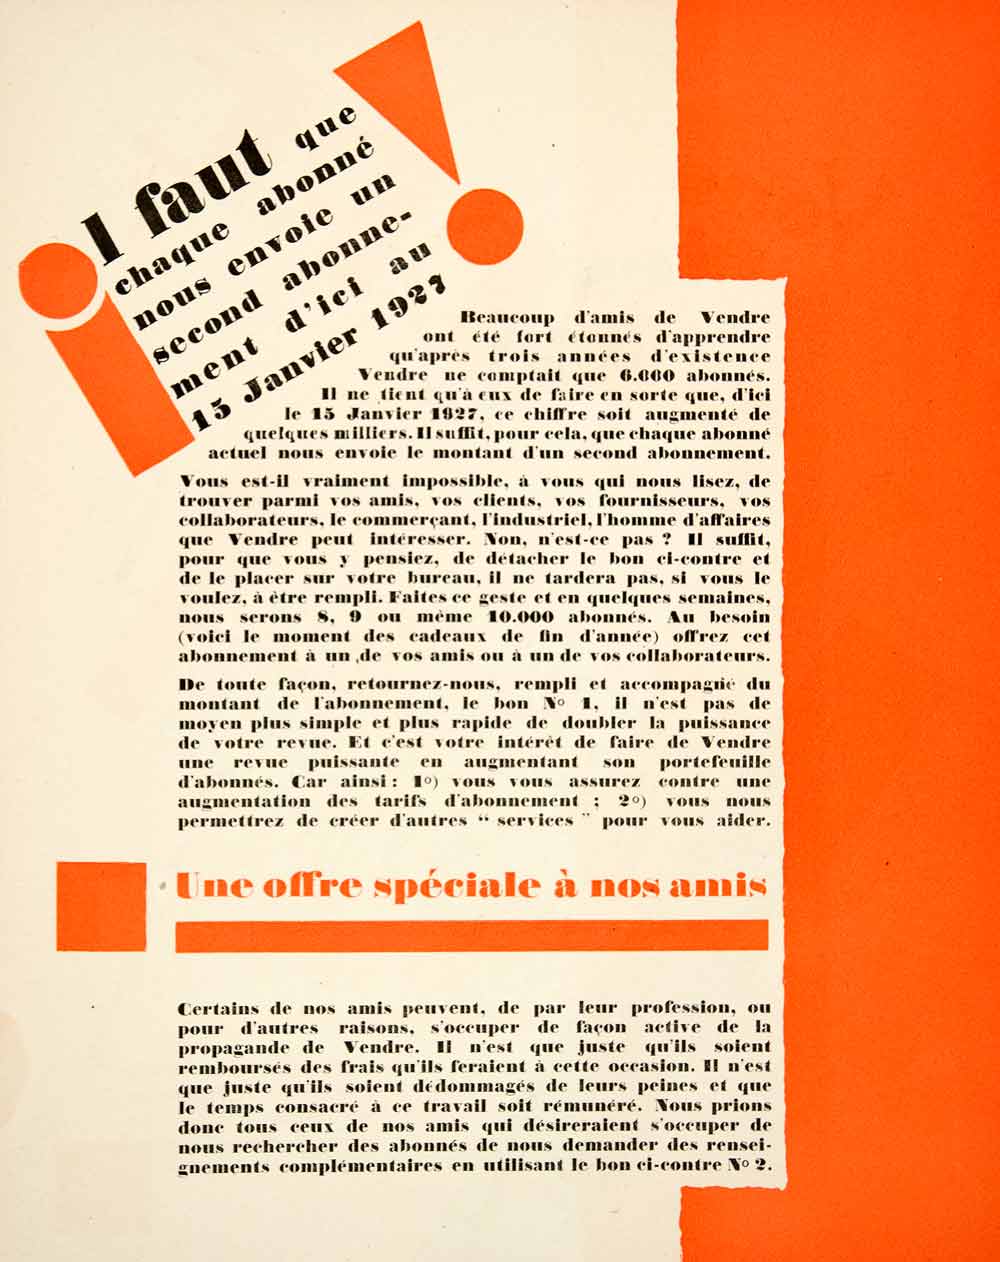 1926 Lithograph Vendre French Trade Magazine Subscription Renewal VEN4